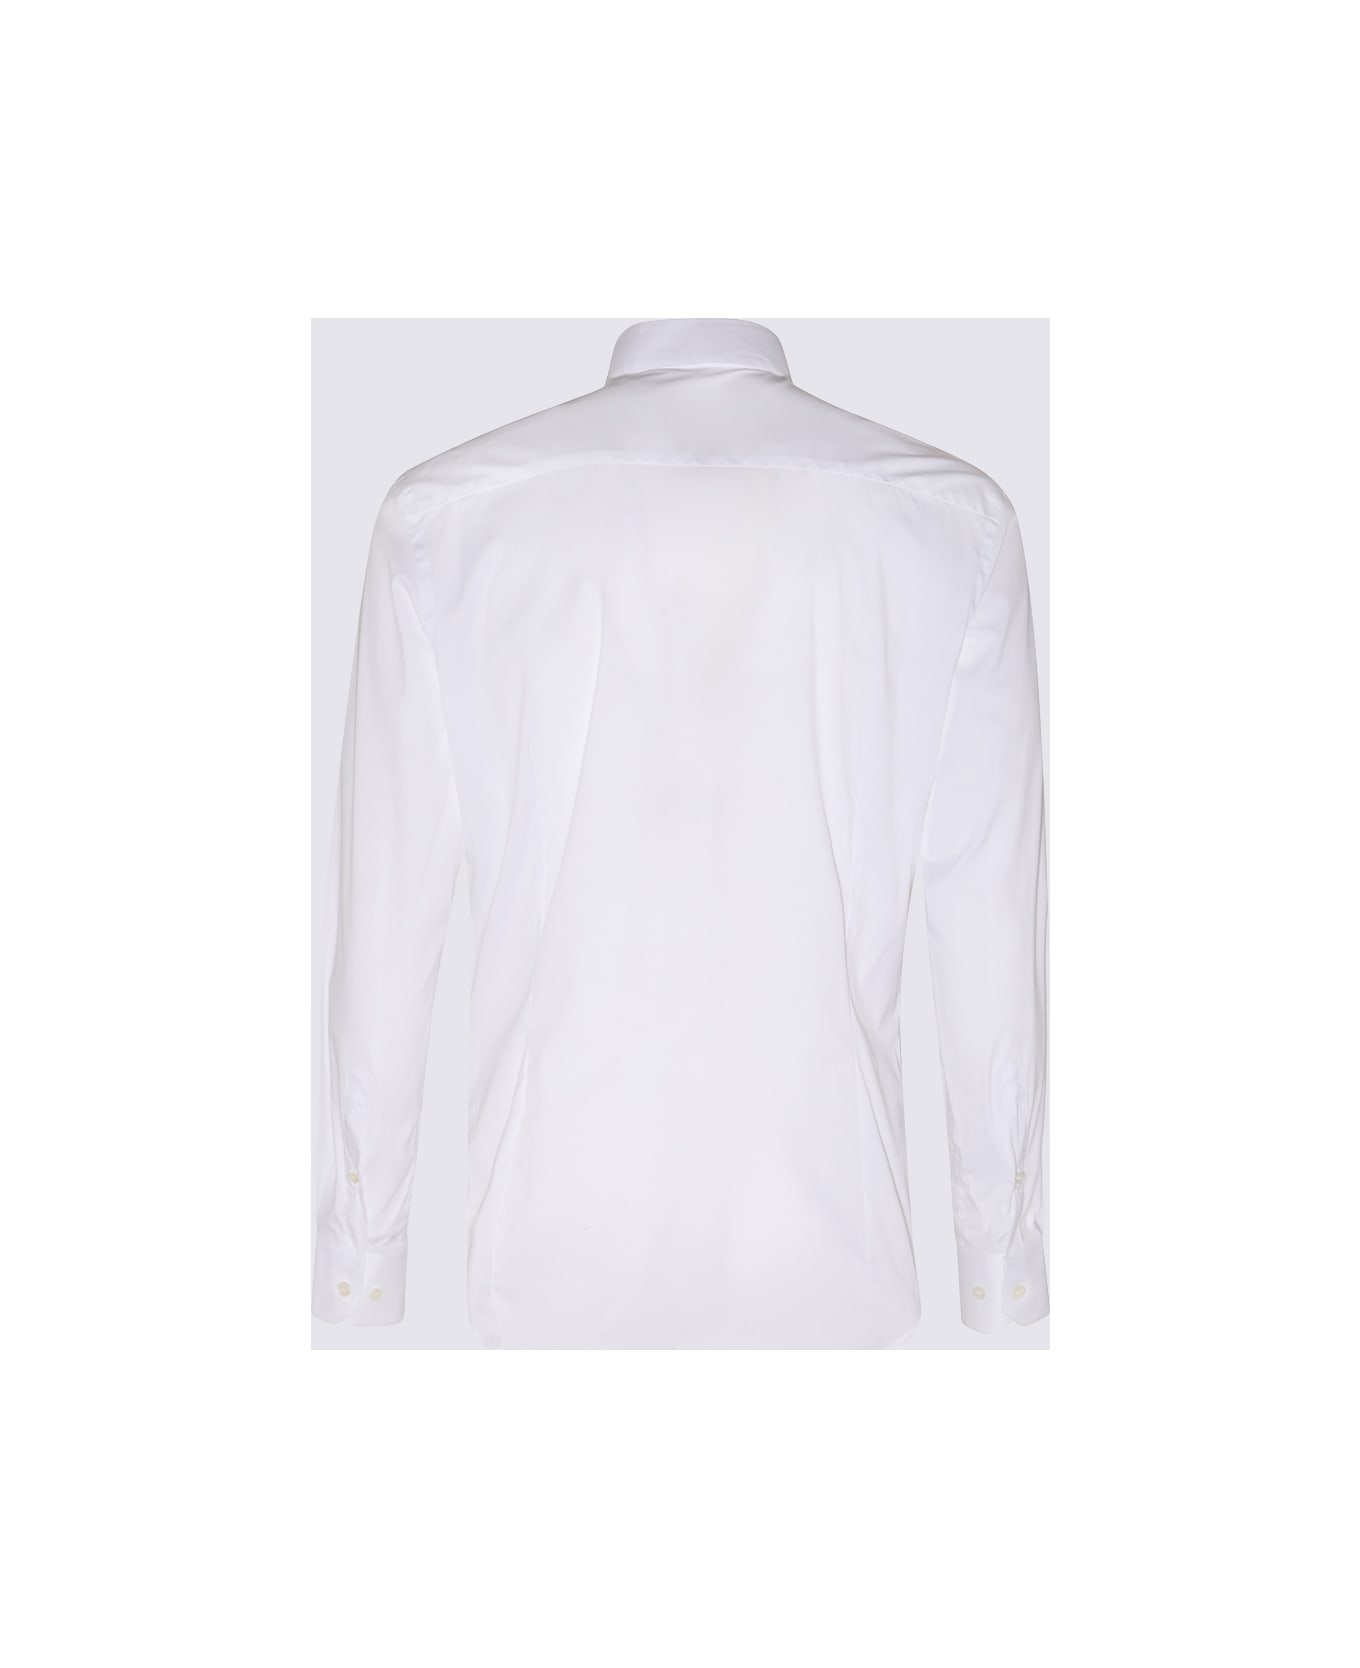 Giorgio Armani White Cotton Shirt - White